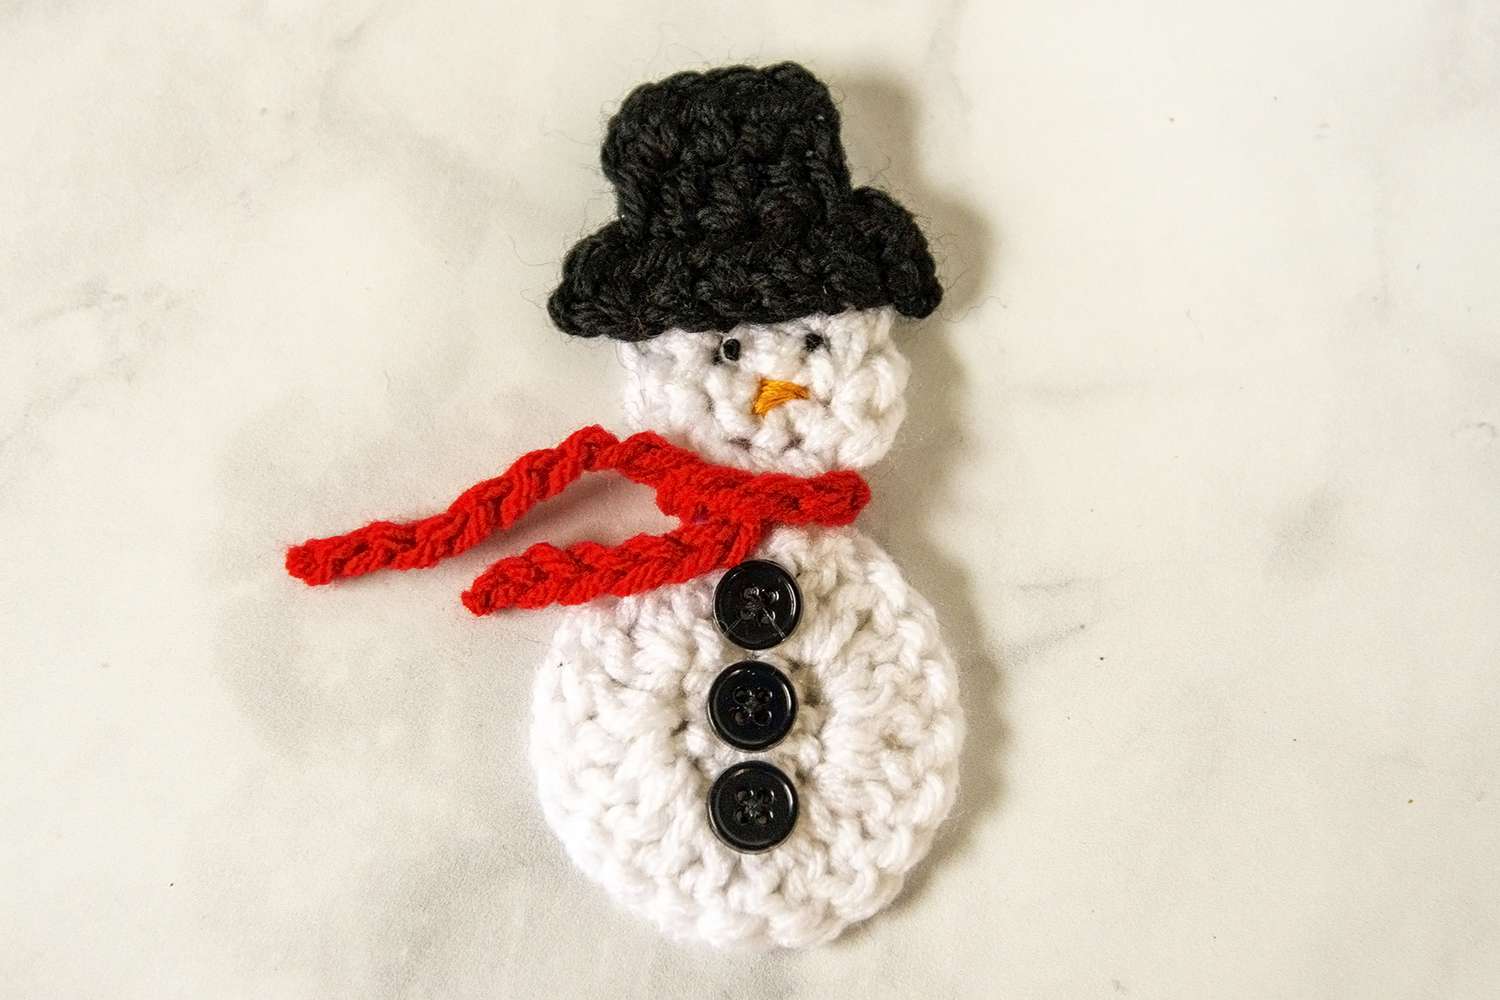 A crocheted snowman